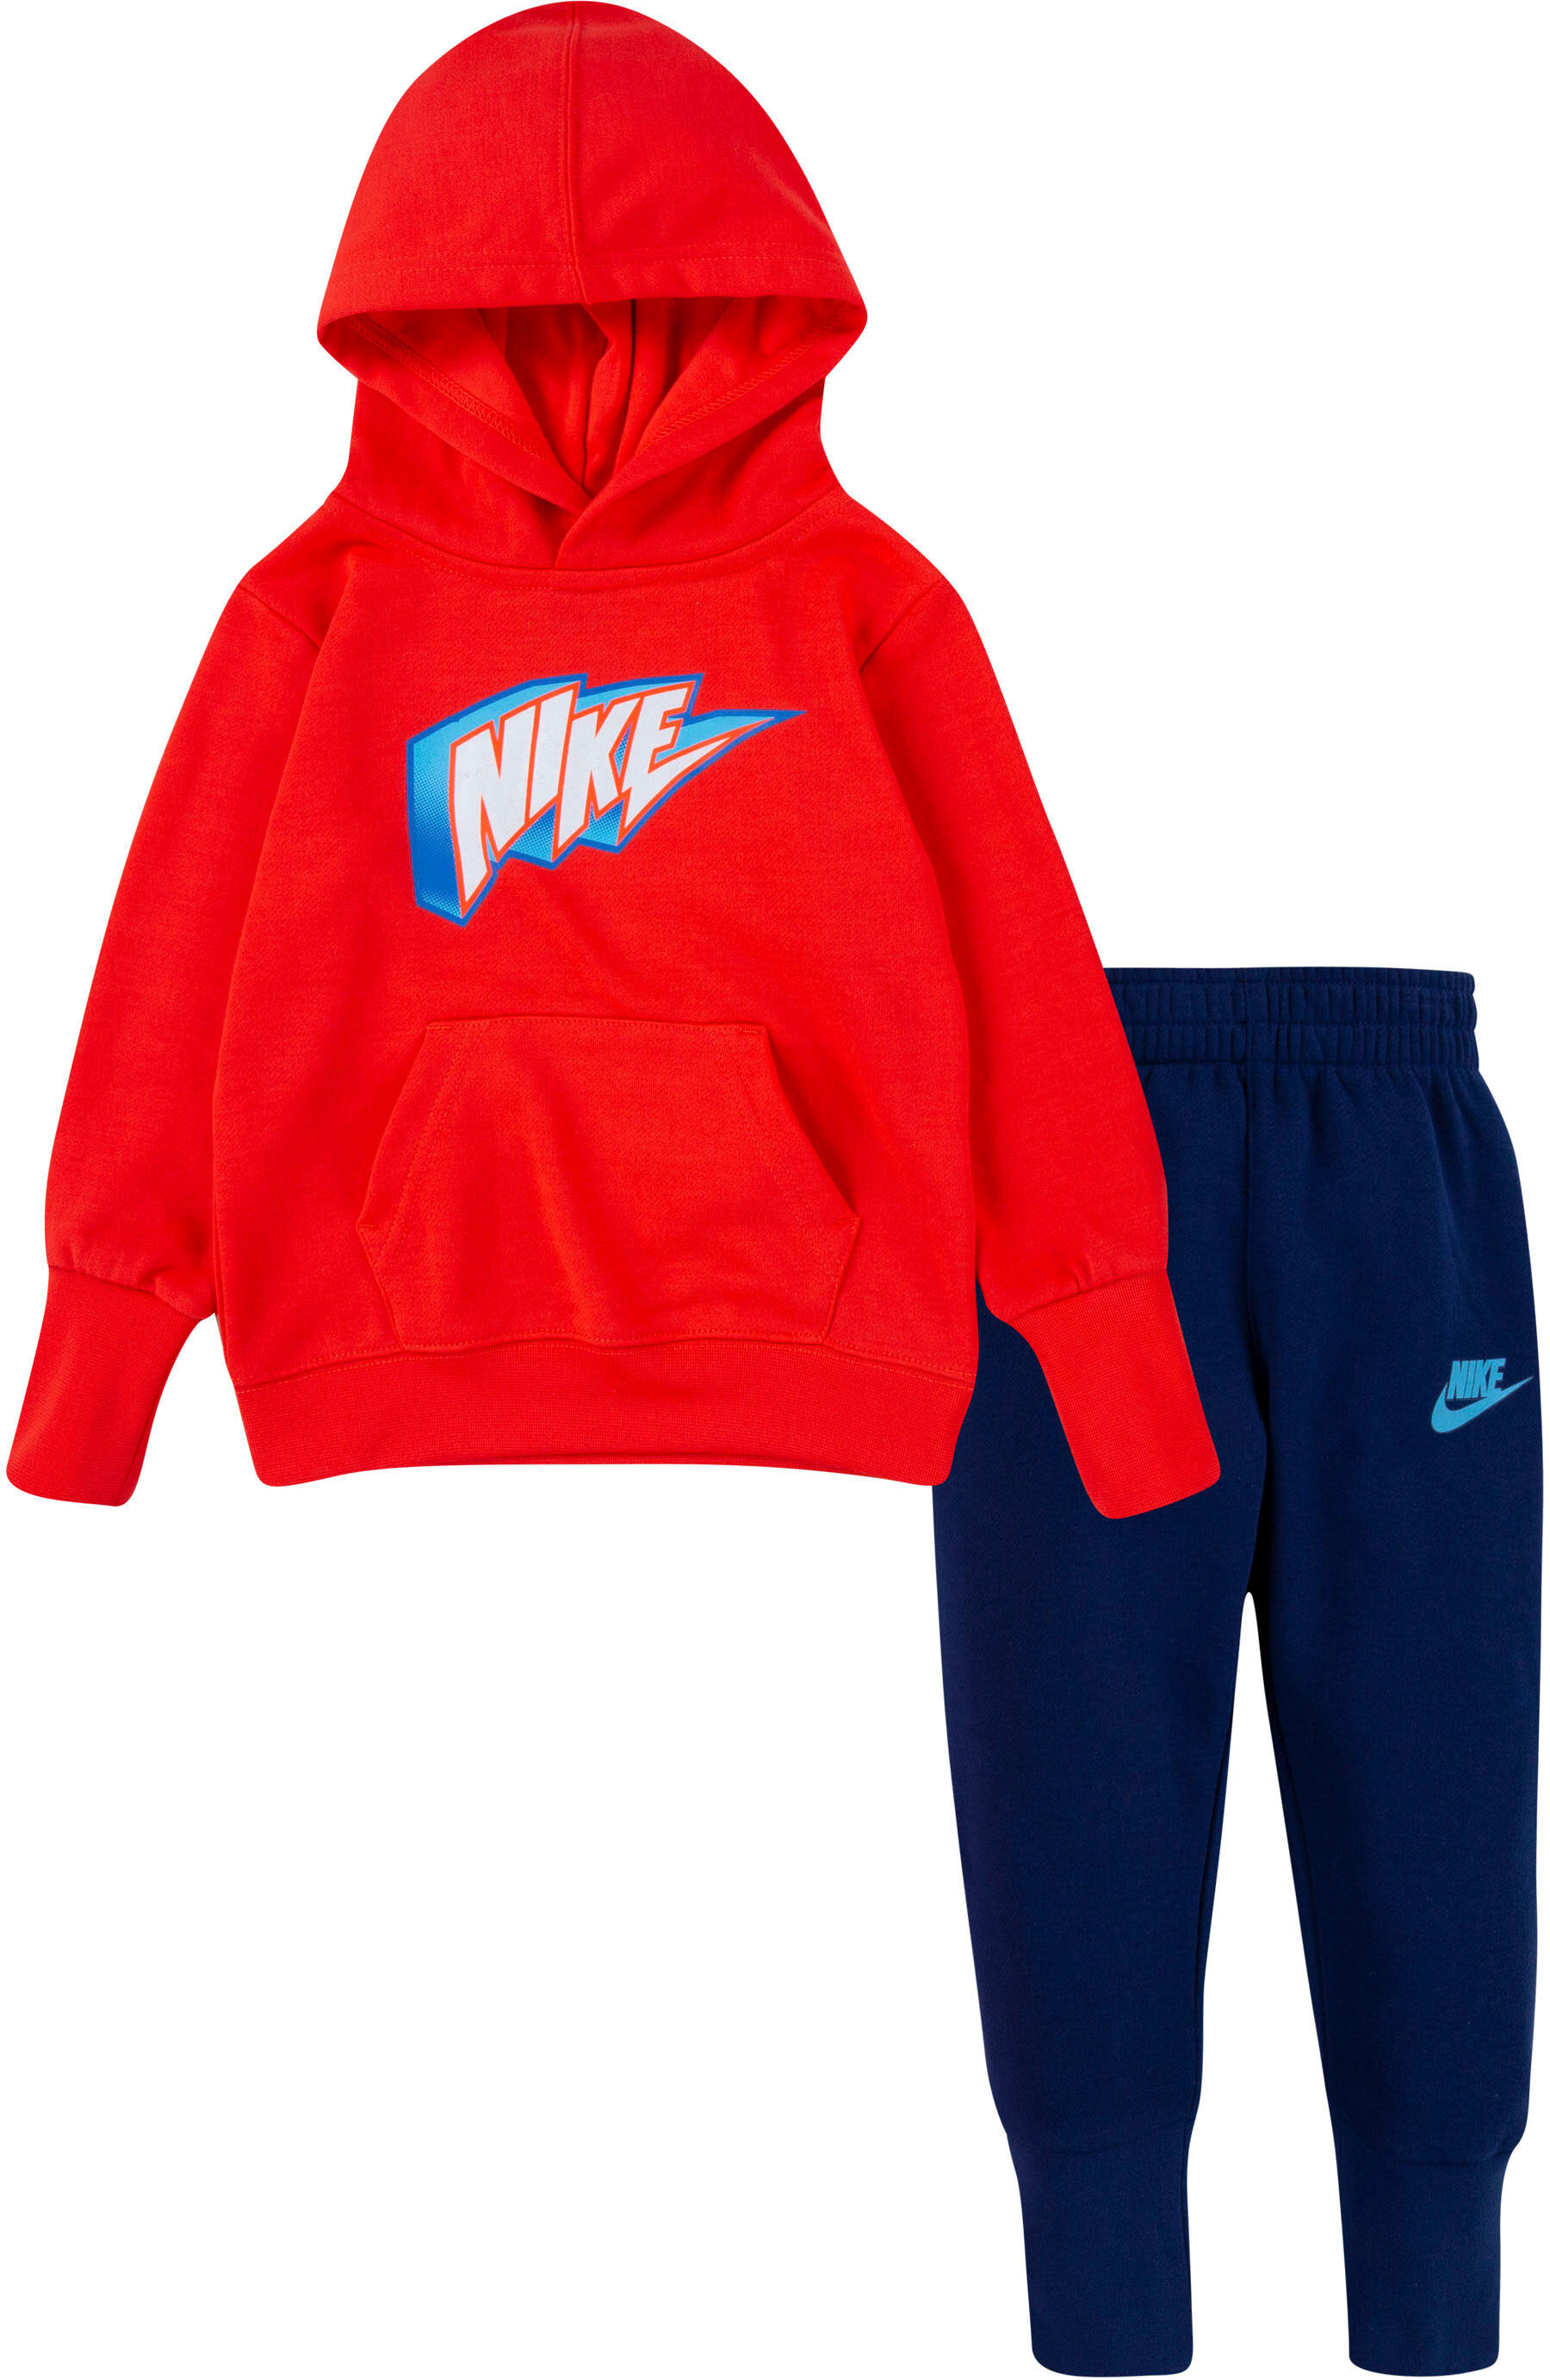 Nike Sportswear Jogginganzug »G4G FT PULLOVER PANT SET« rot  12M (80) 18M (86) 24M (92)